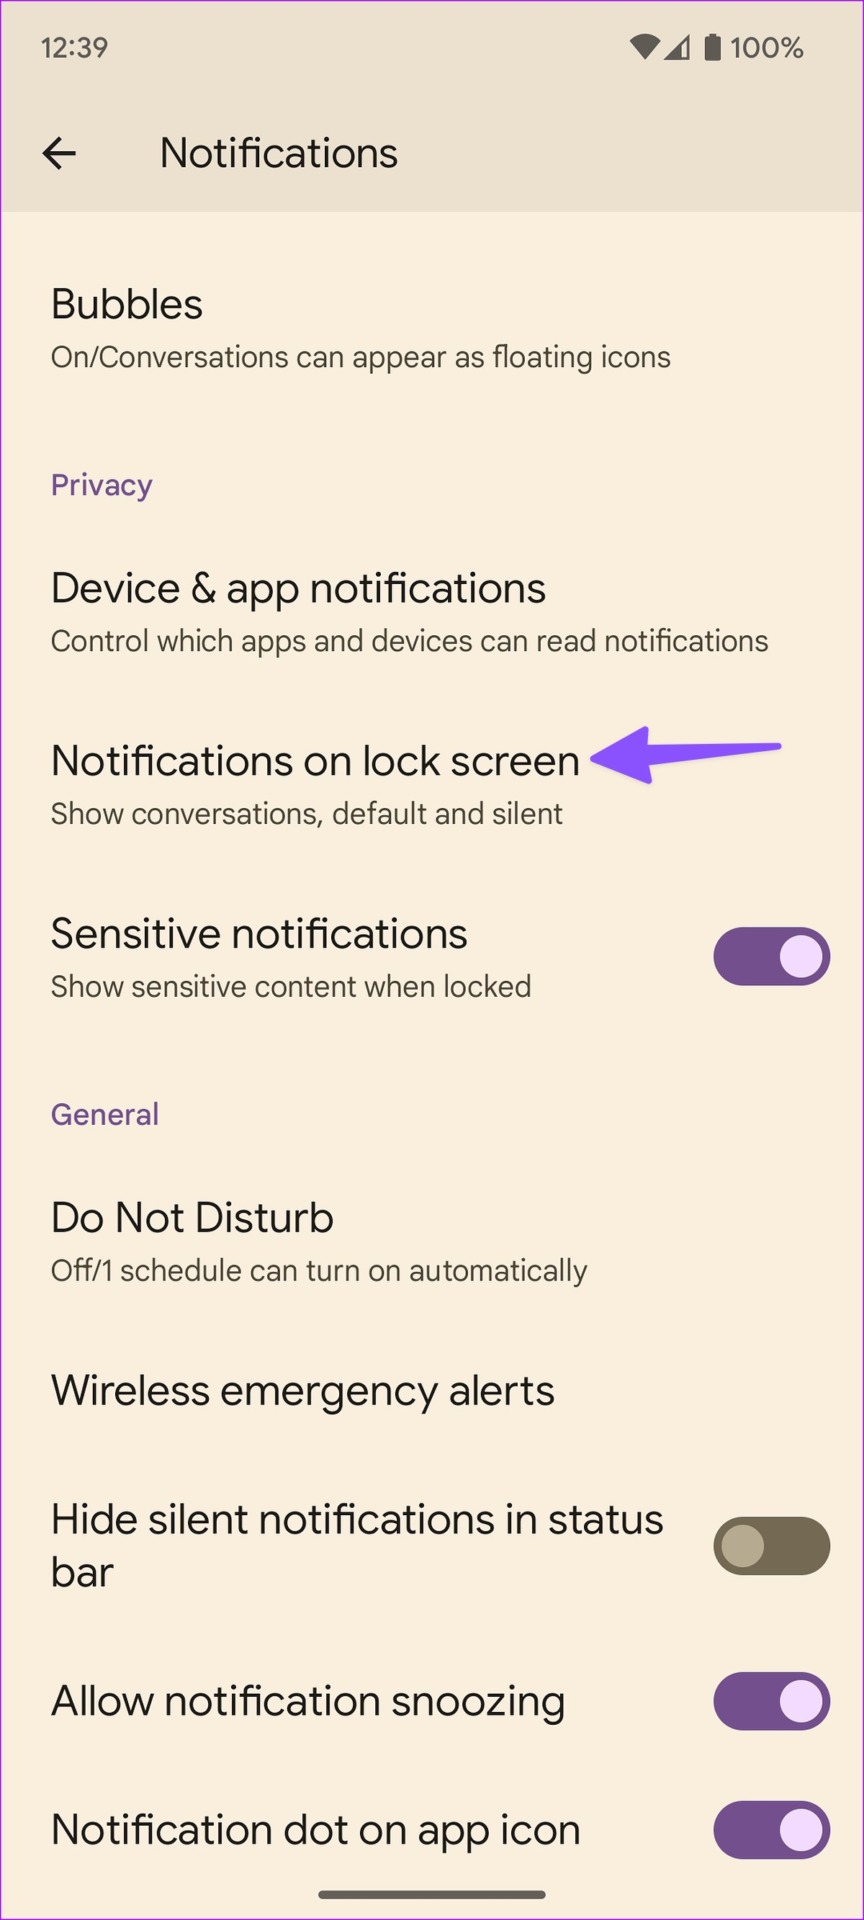 notifications on lock screen